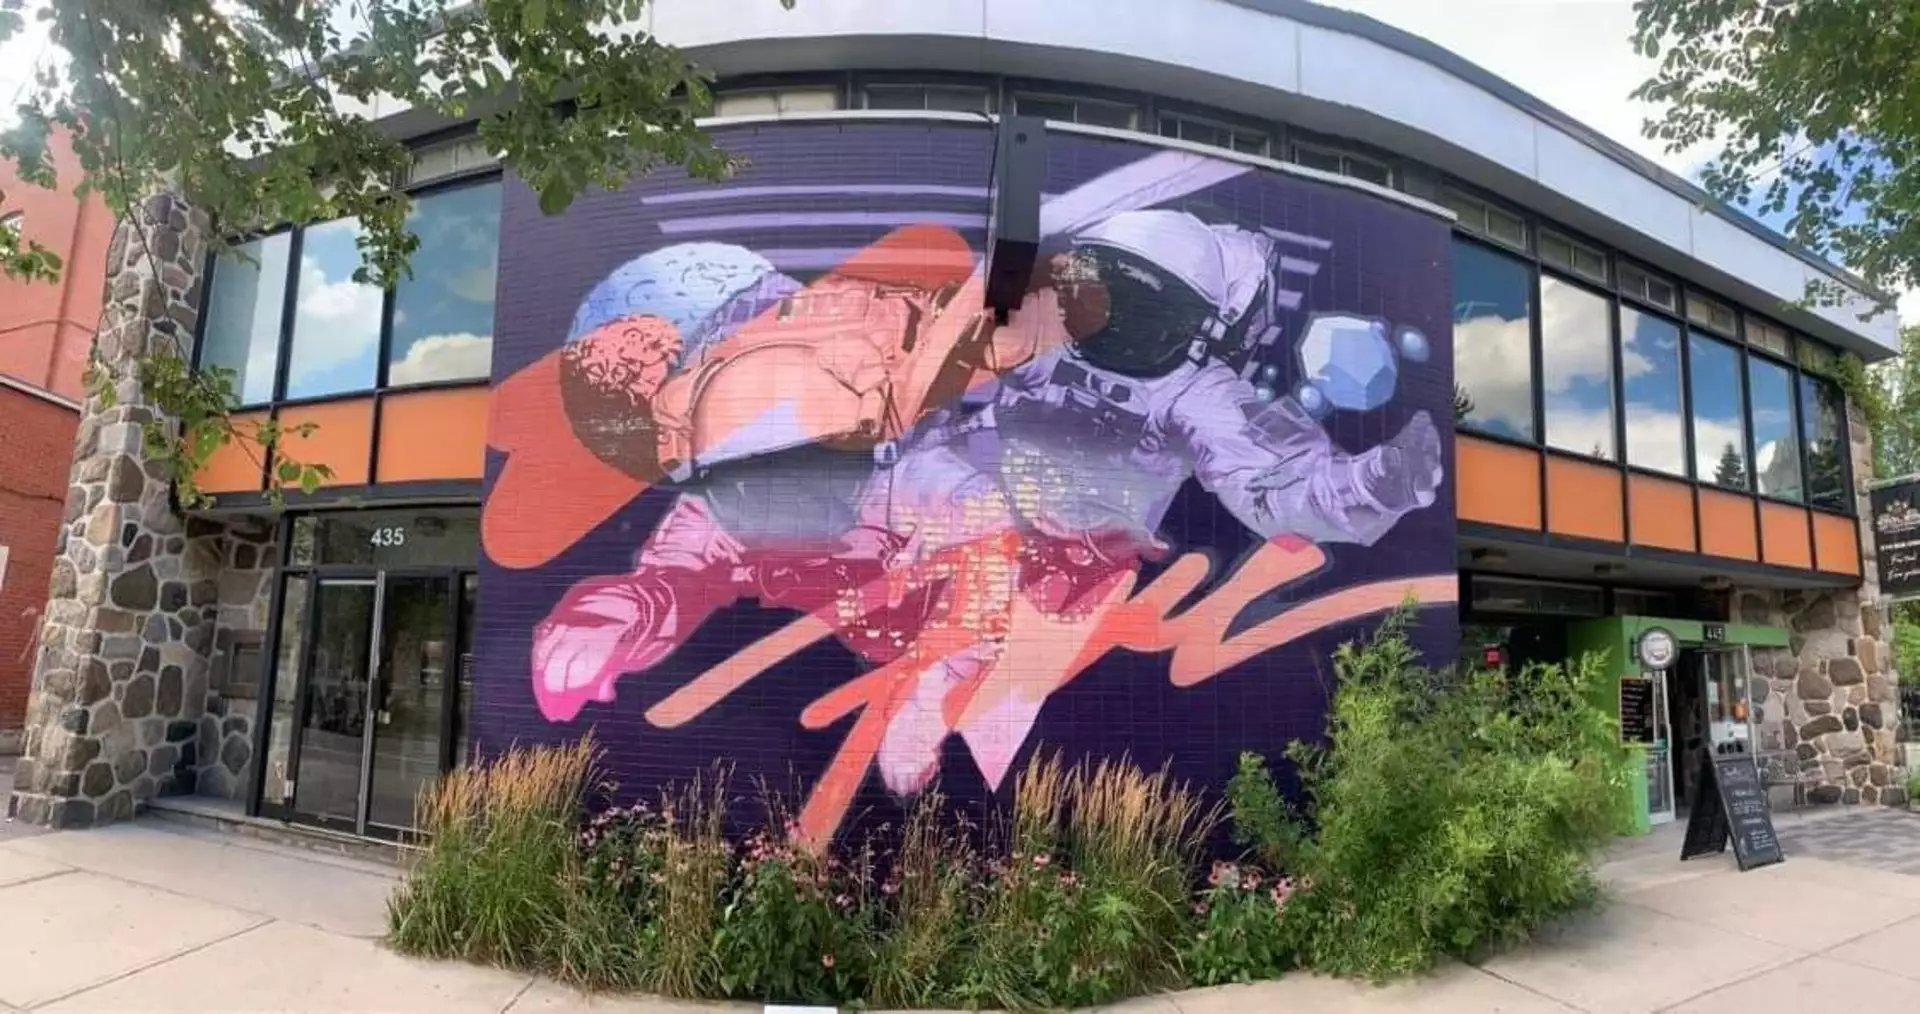 Oeuvre de Street Art à Montreal